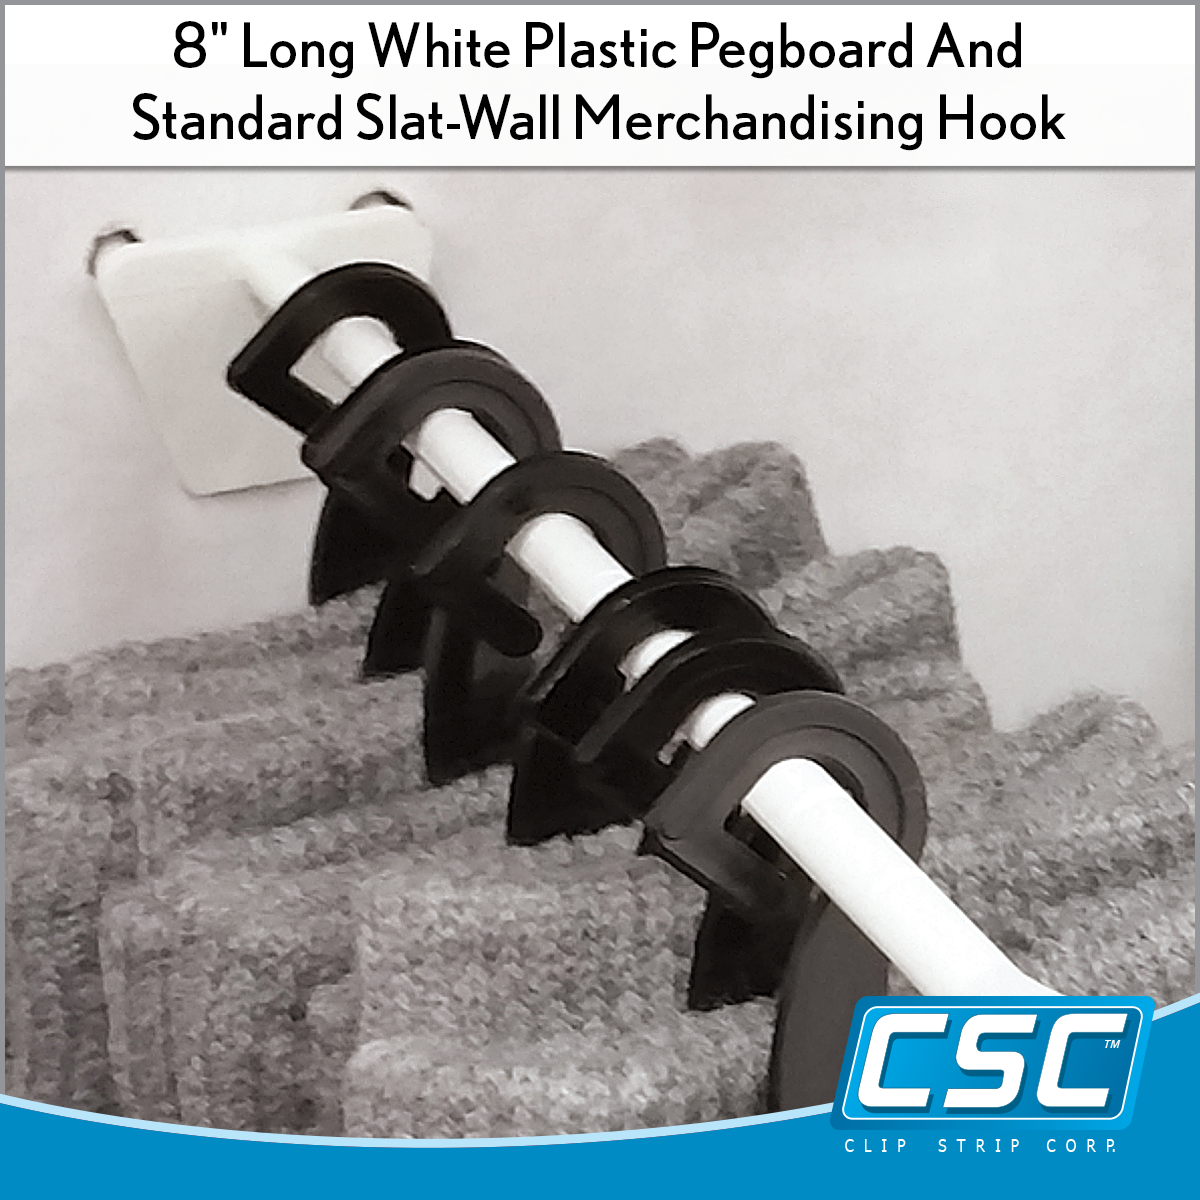 Peg Board and Slatwall Hooks - Plastic, 8 long, Retail Product